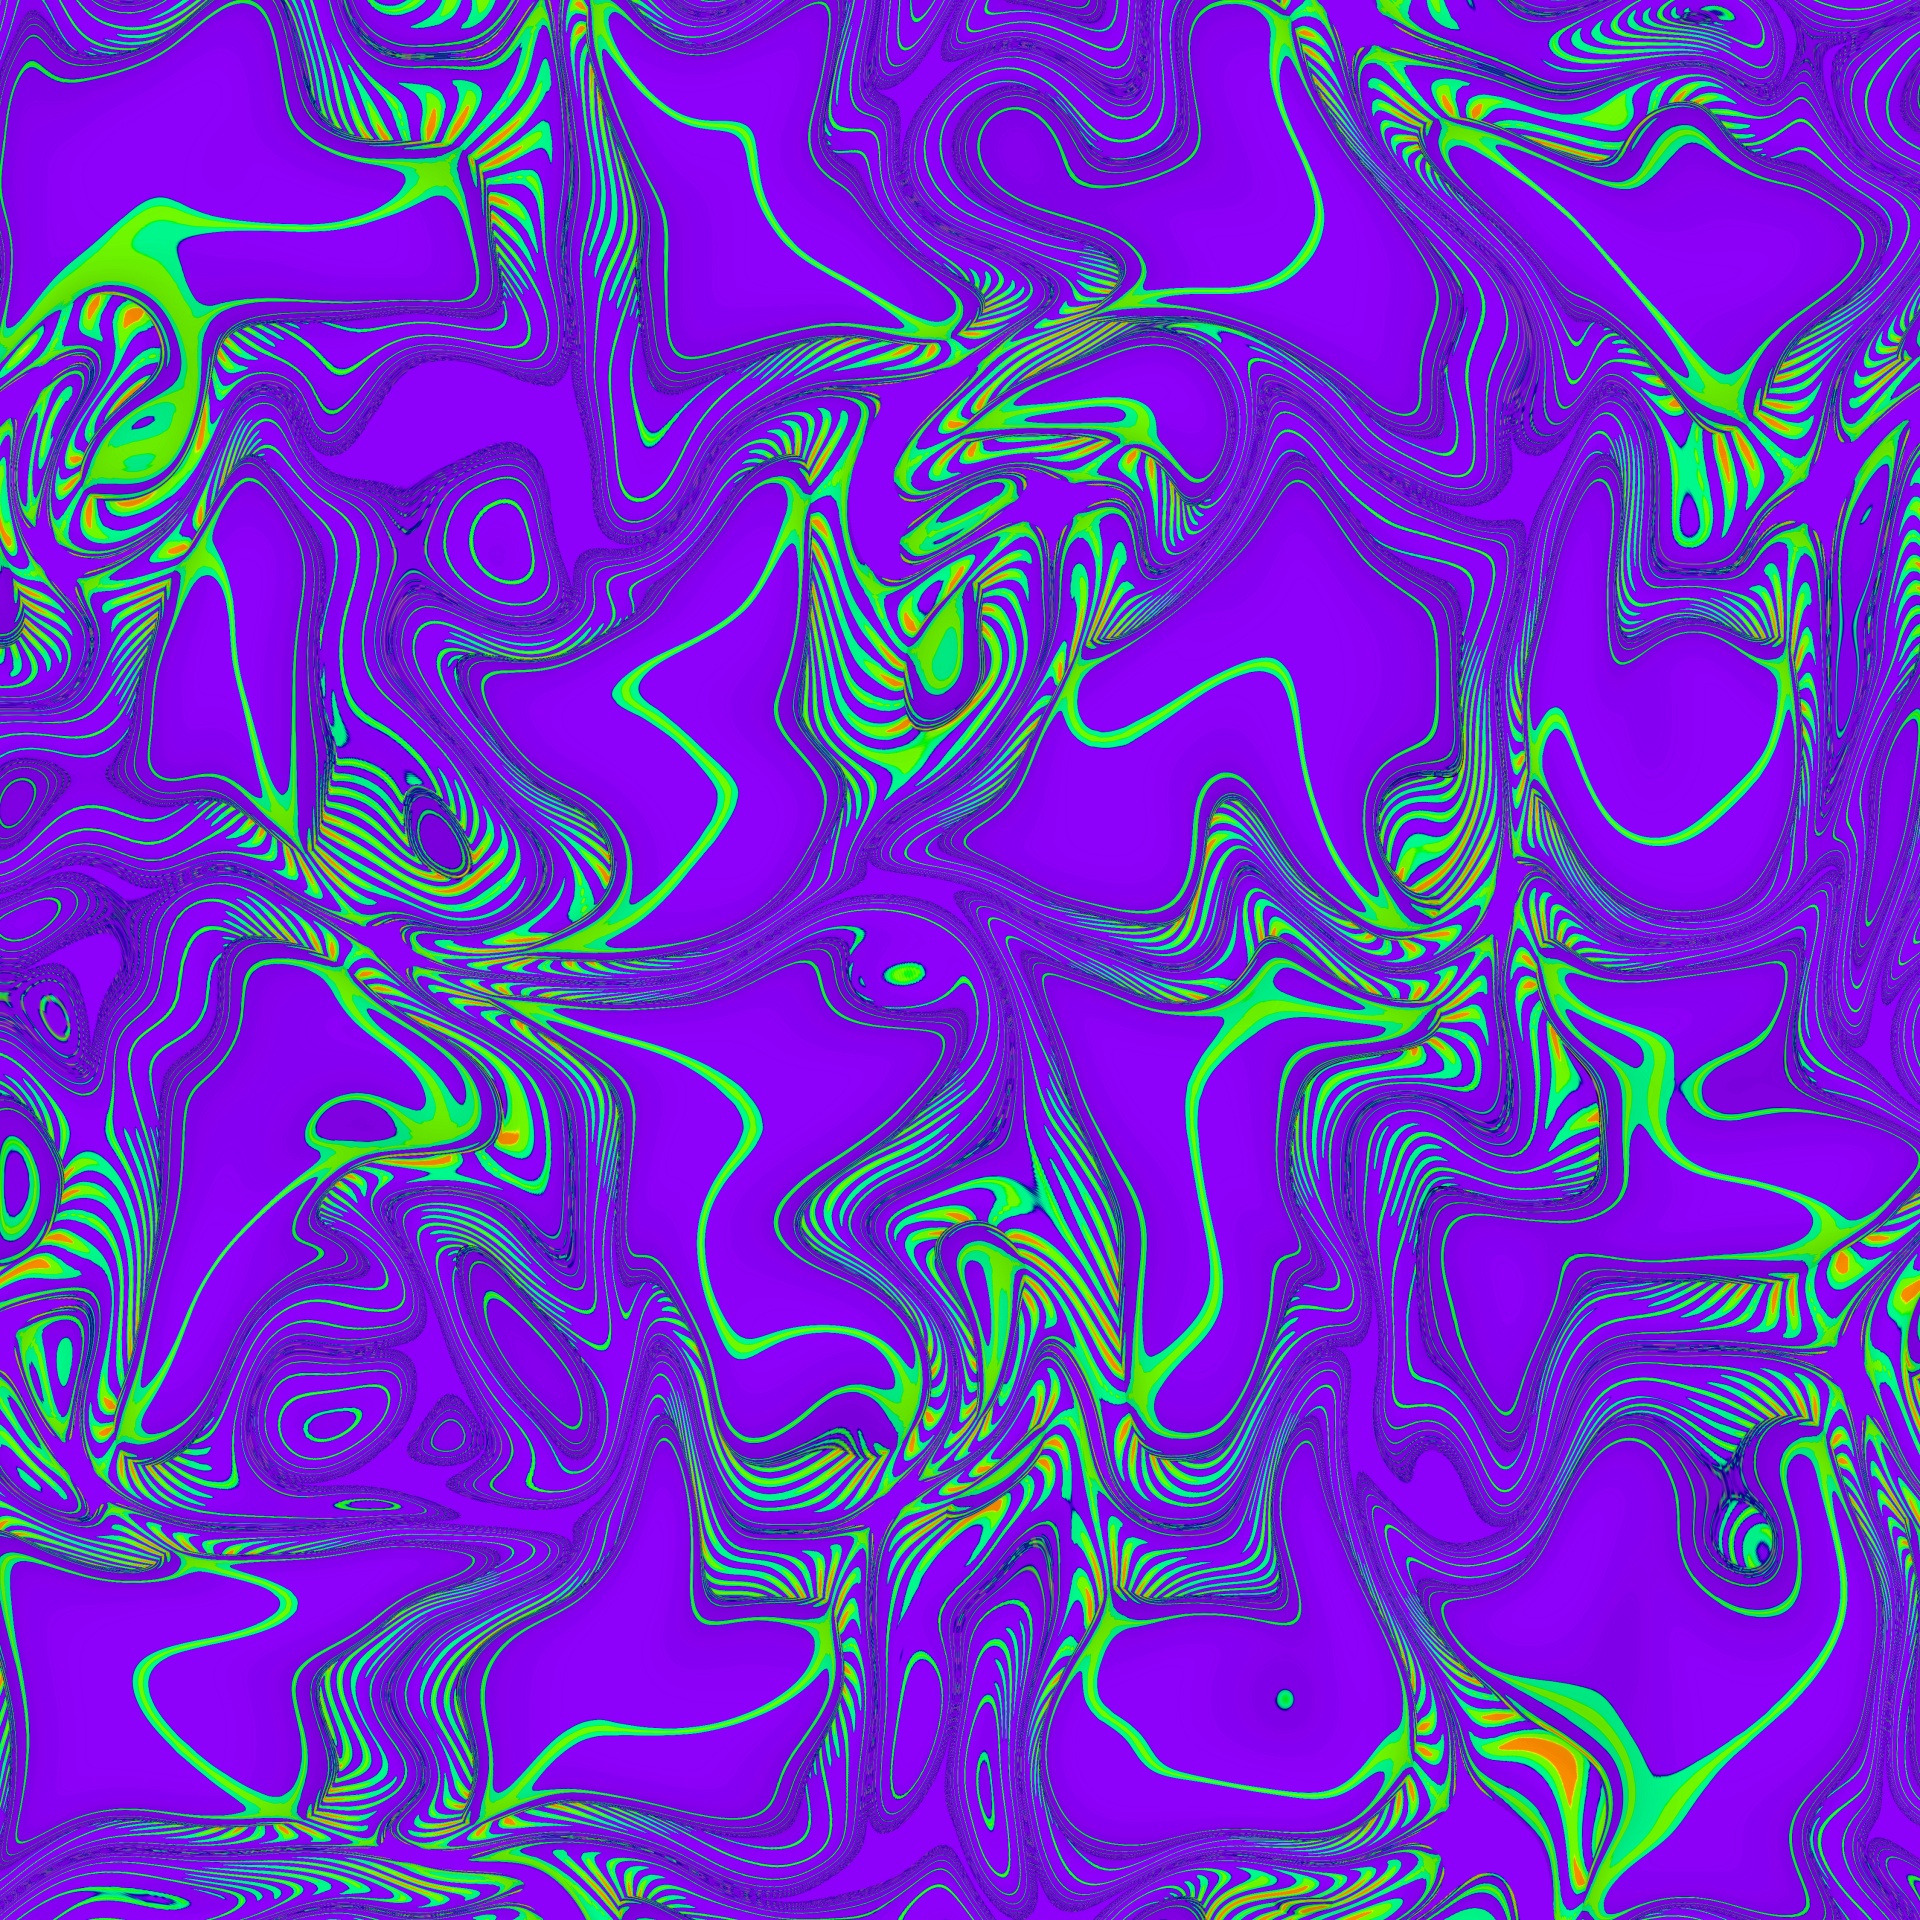 Royal Purple Swirling Background Free Stock Photo - Public ...